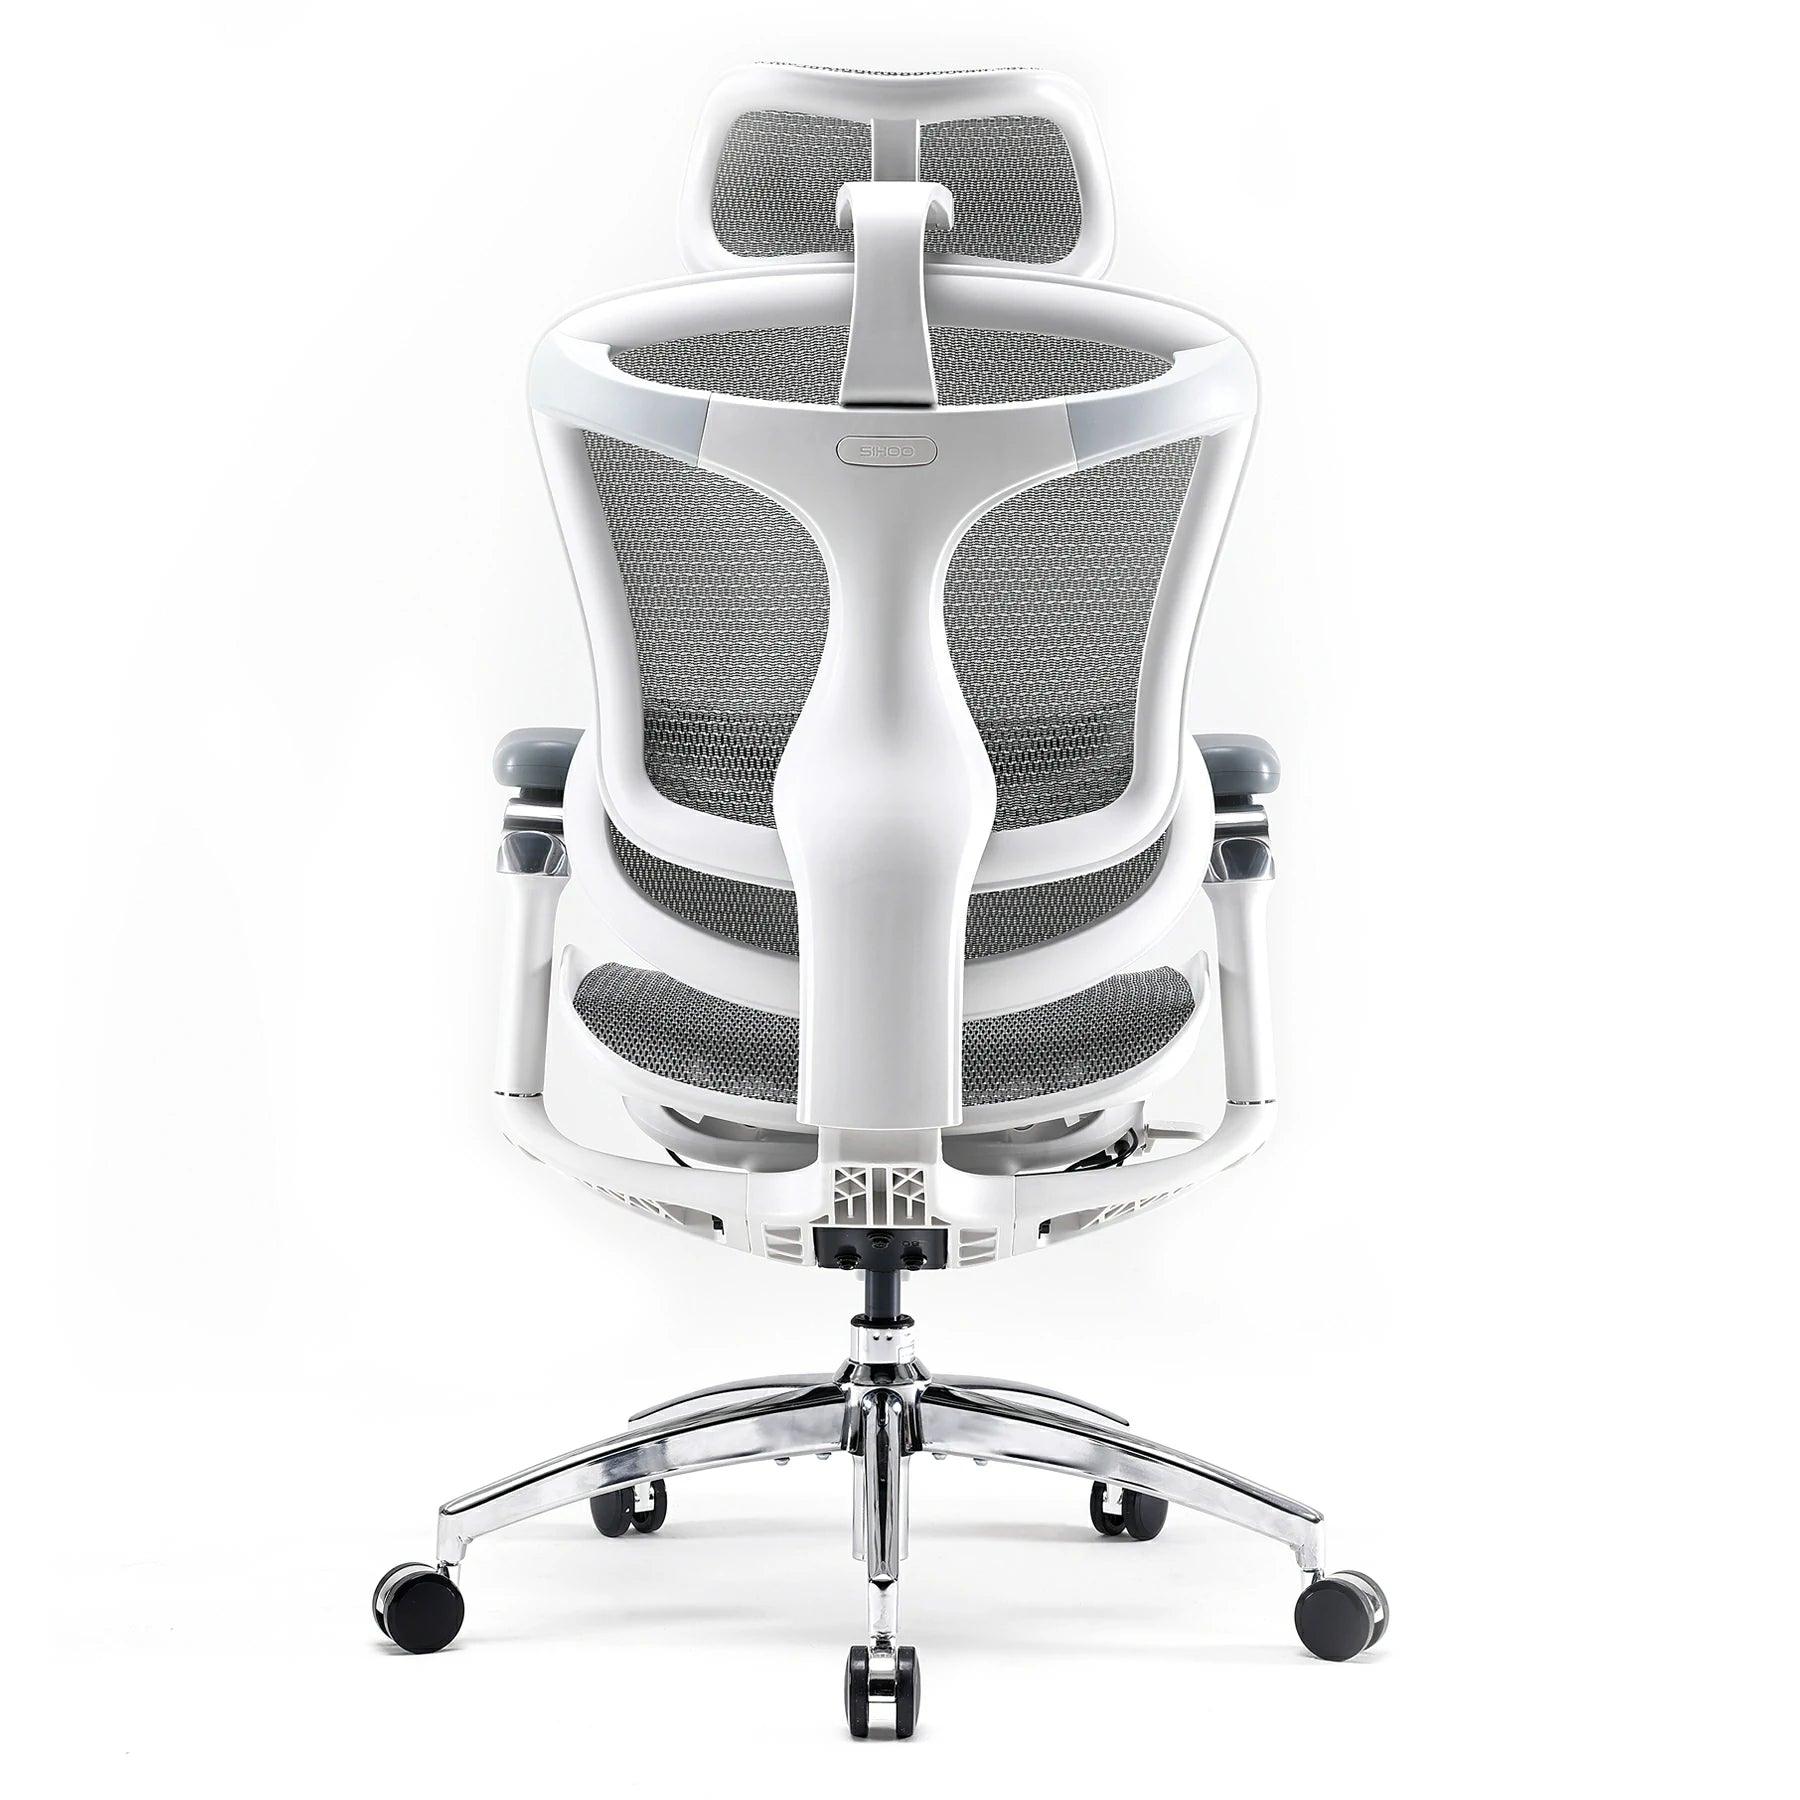 Sihoo Doro S300 ergonomic office chair review - The Gadgeteer